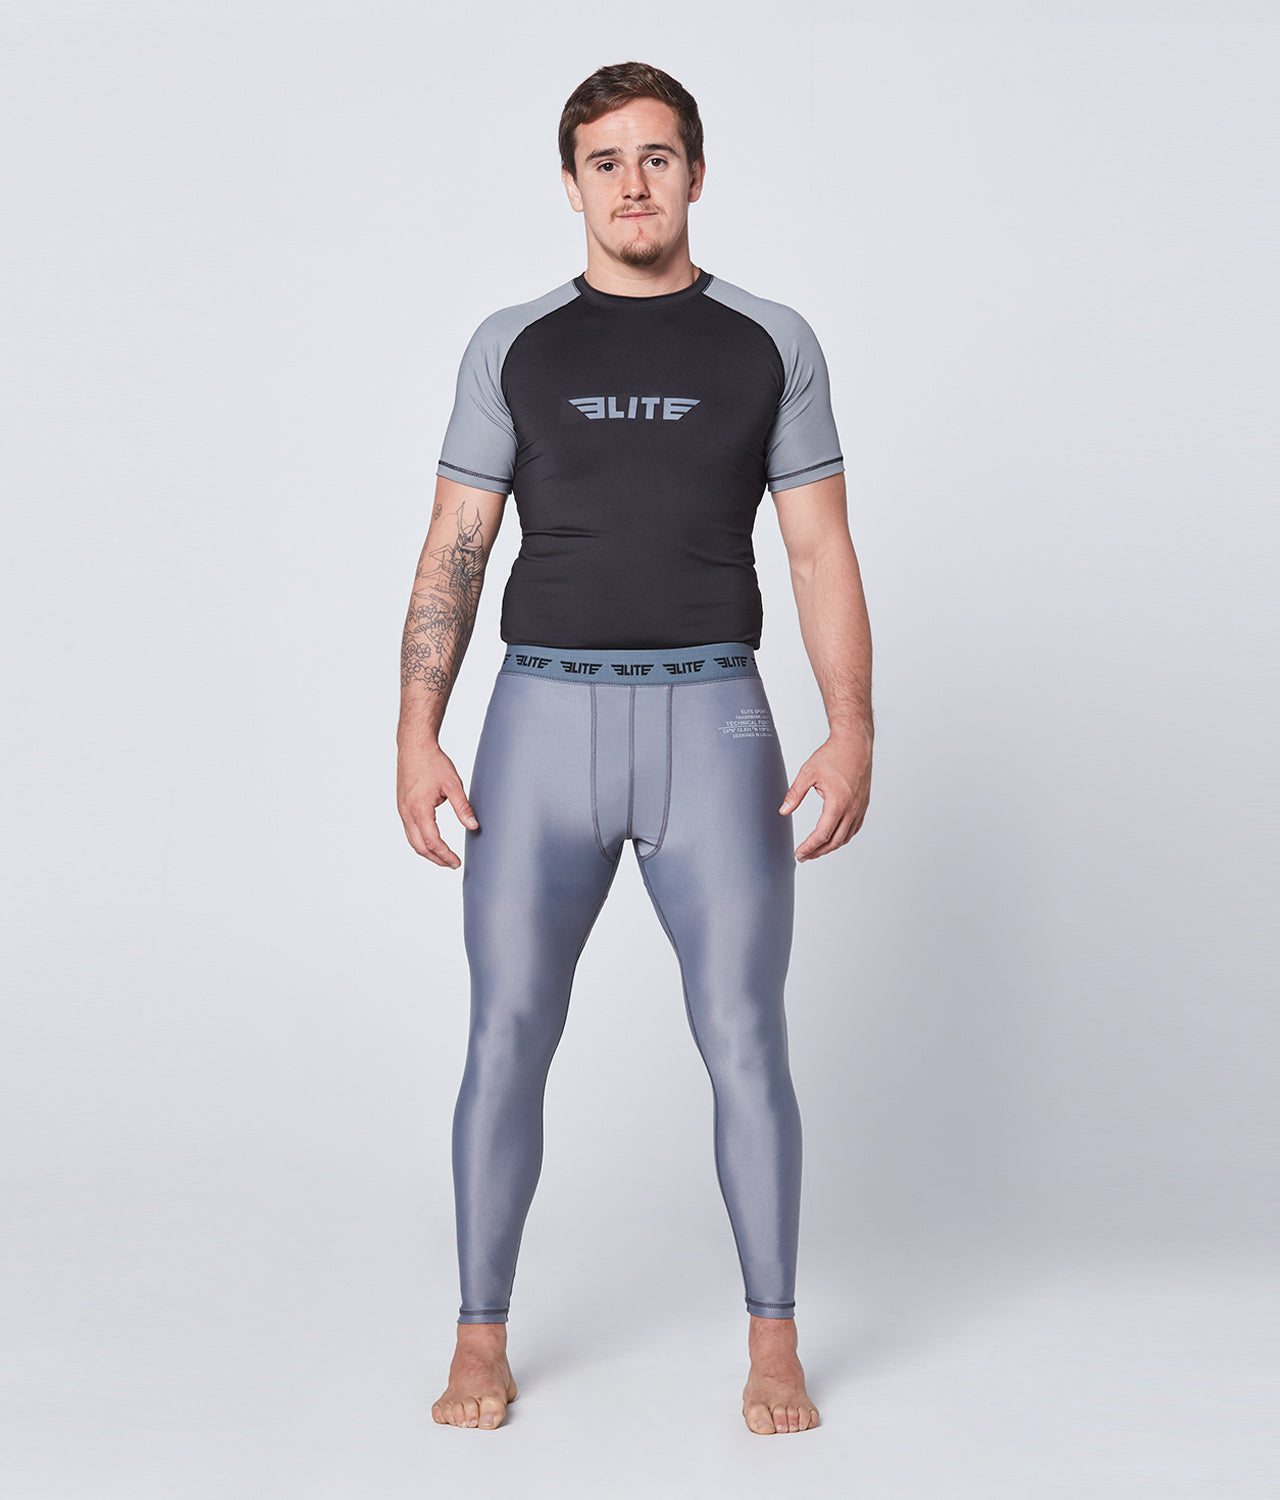 Elite Sports Kids Compression Training Spat Pants (Grey, Medium